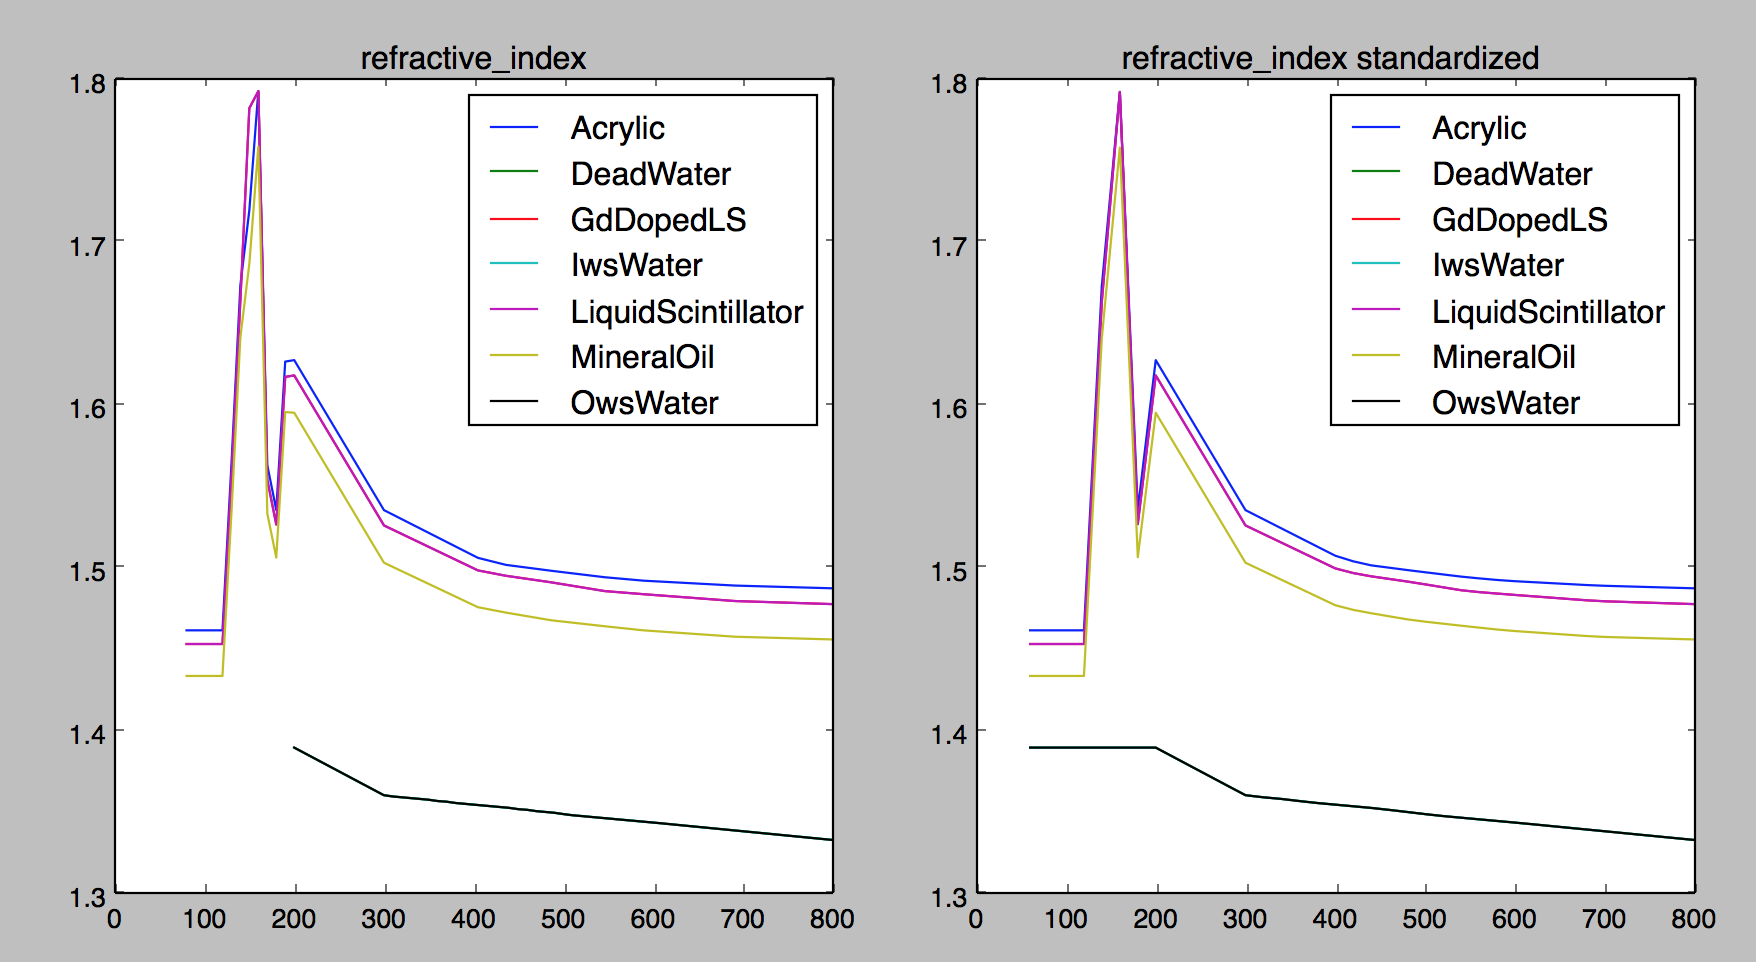 /env/g4dae/plot_refractive_index_comparison.png